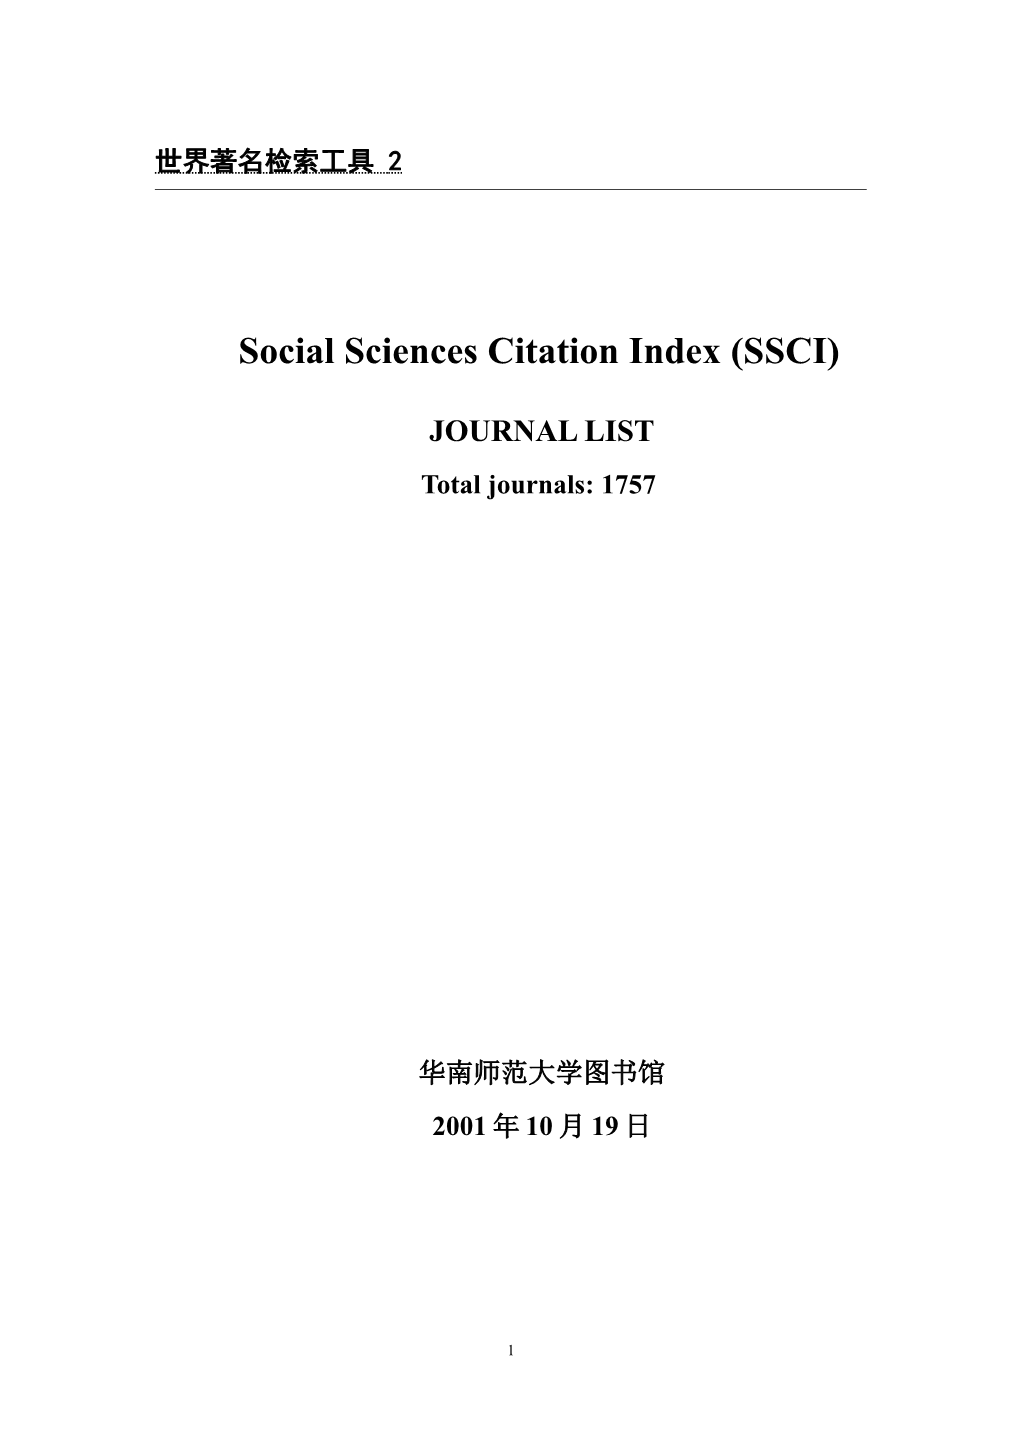 Social Sciences Citation Index(SSCI)